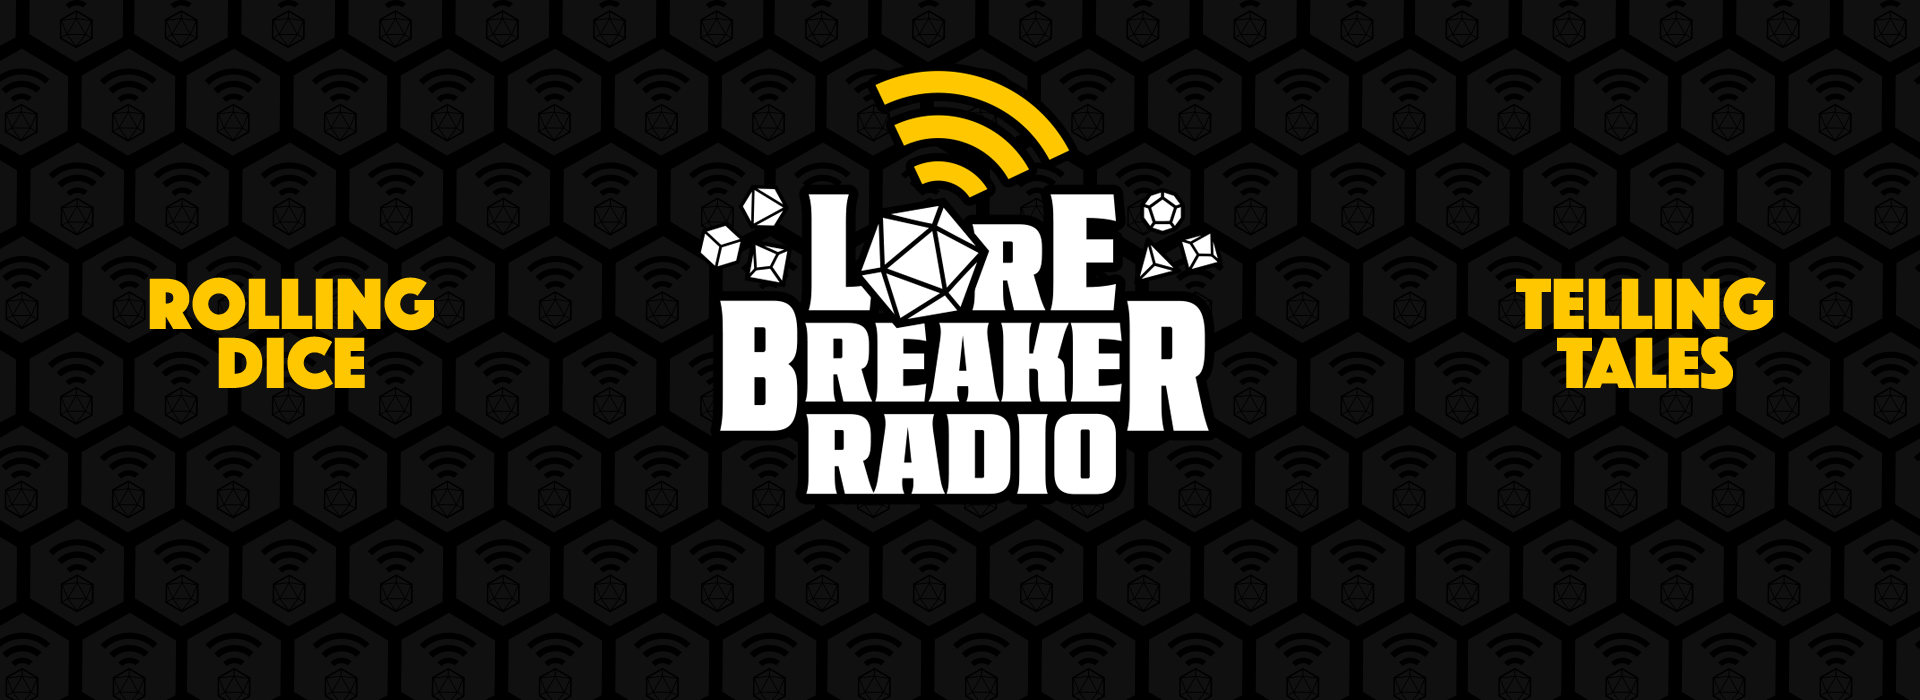 Lore Breaker Radio